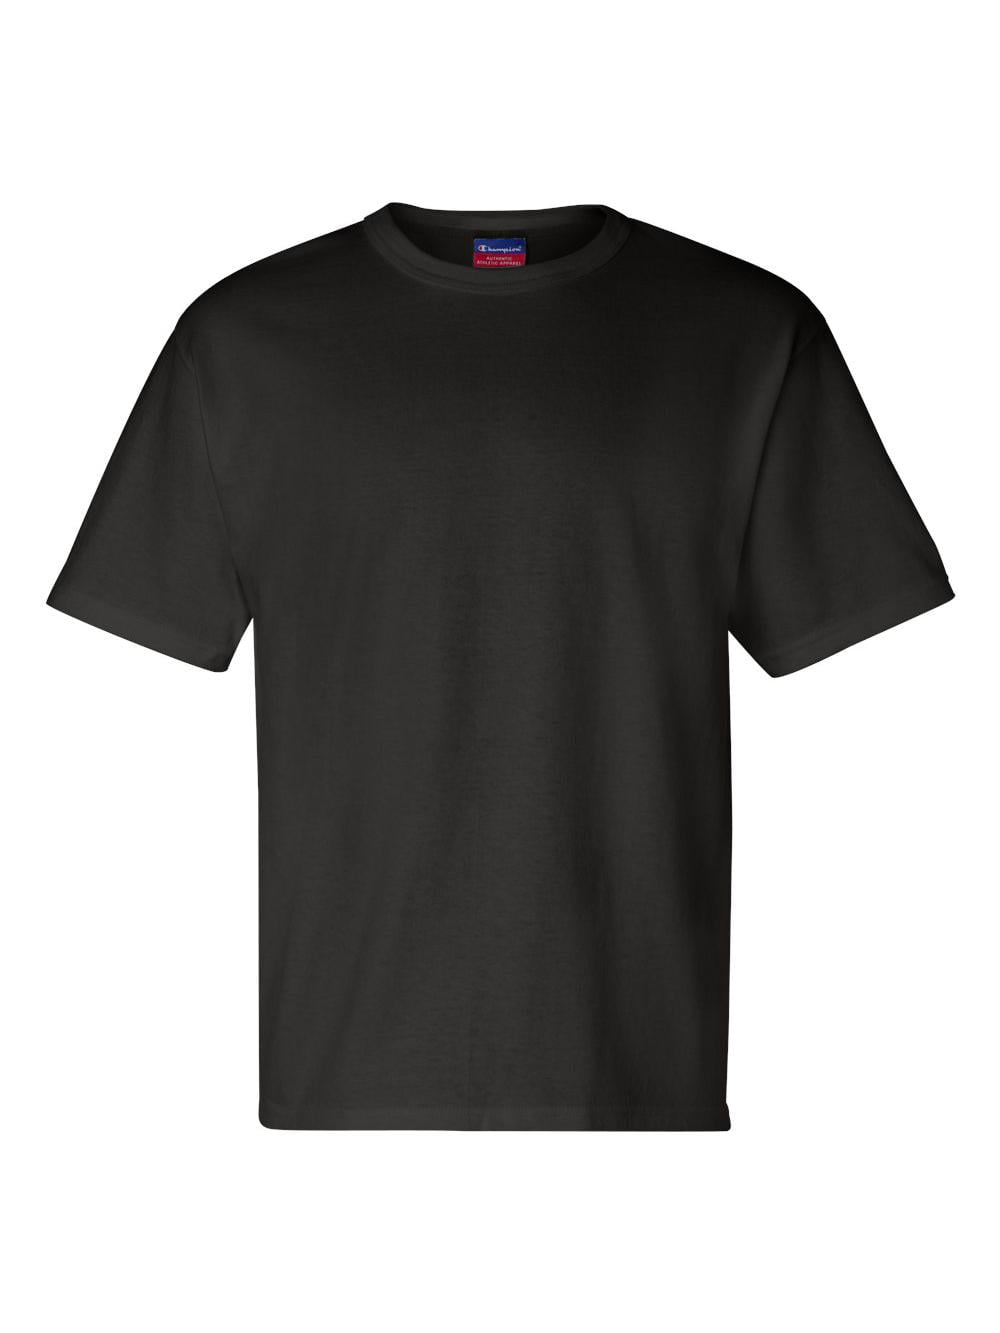 GADID ANONIEM  tシャツ  TEUN / GRAY  SIZE1